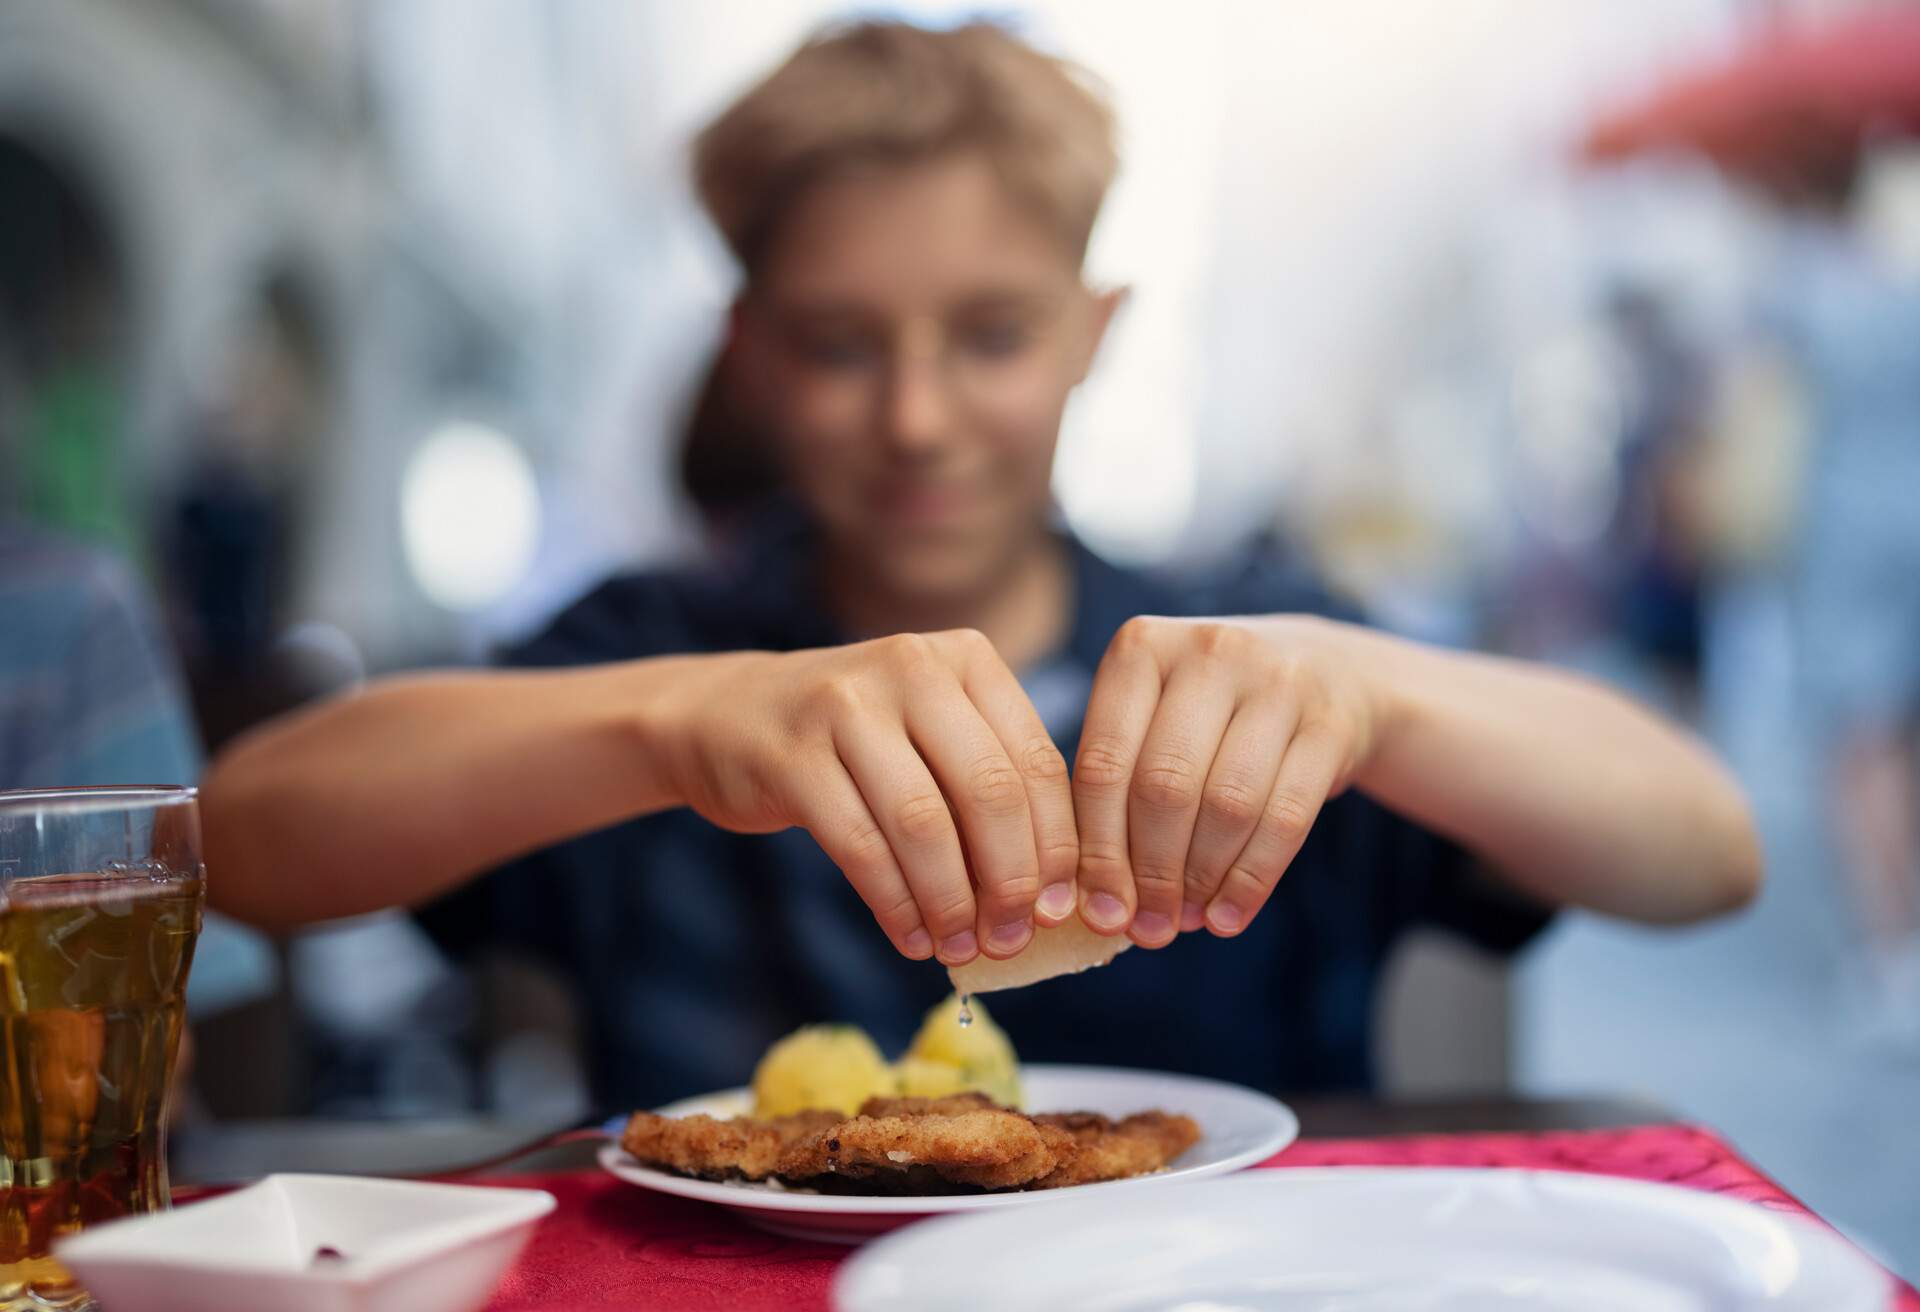 Teenage boy eating wiener schnitzel in a restaurant. The boy is squeezing lemon over the schnitzel...Nikon D850